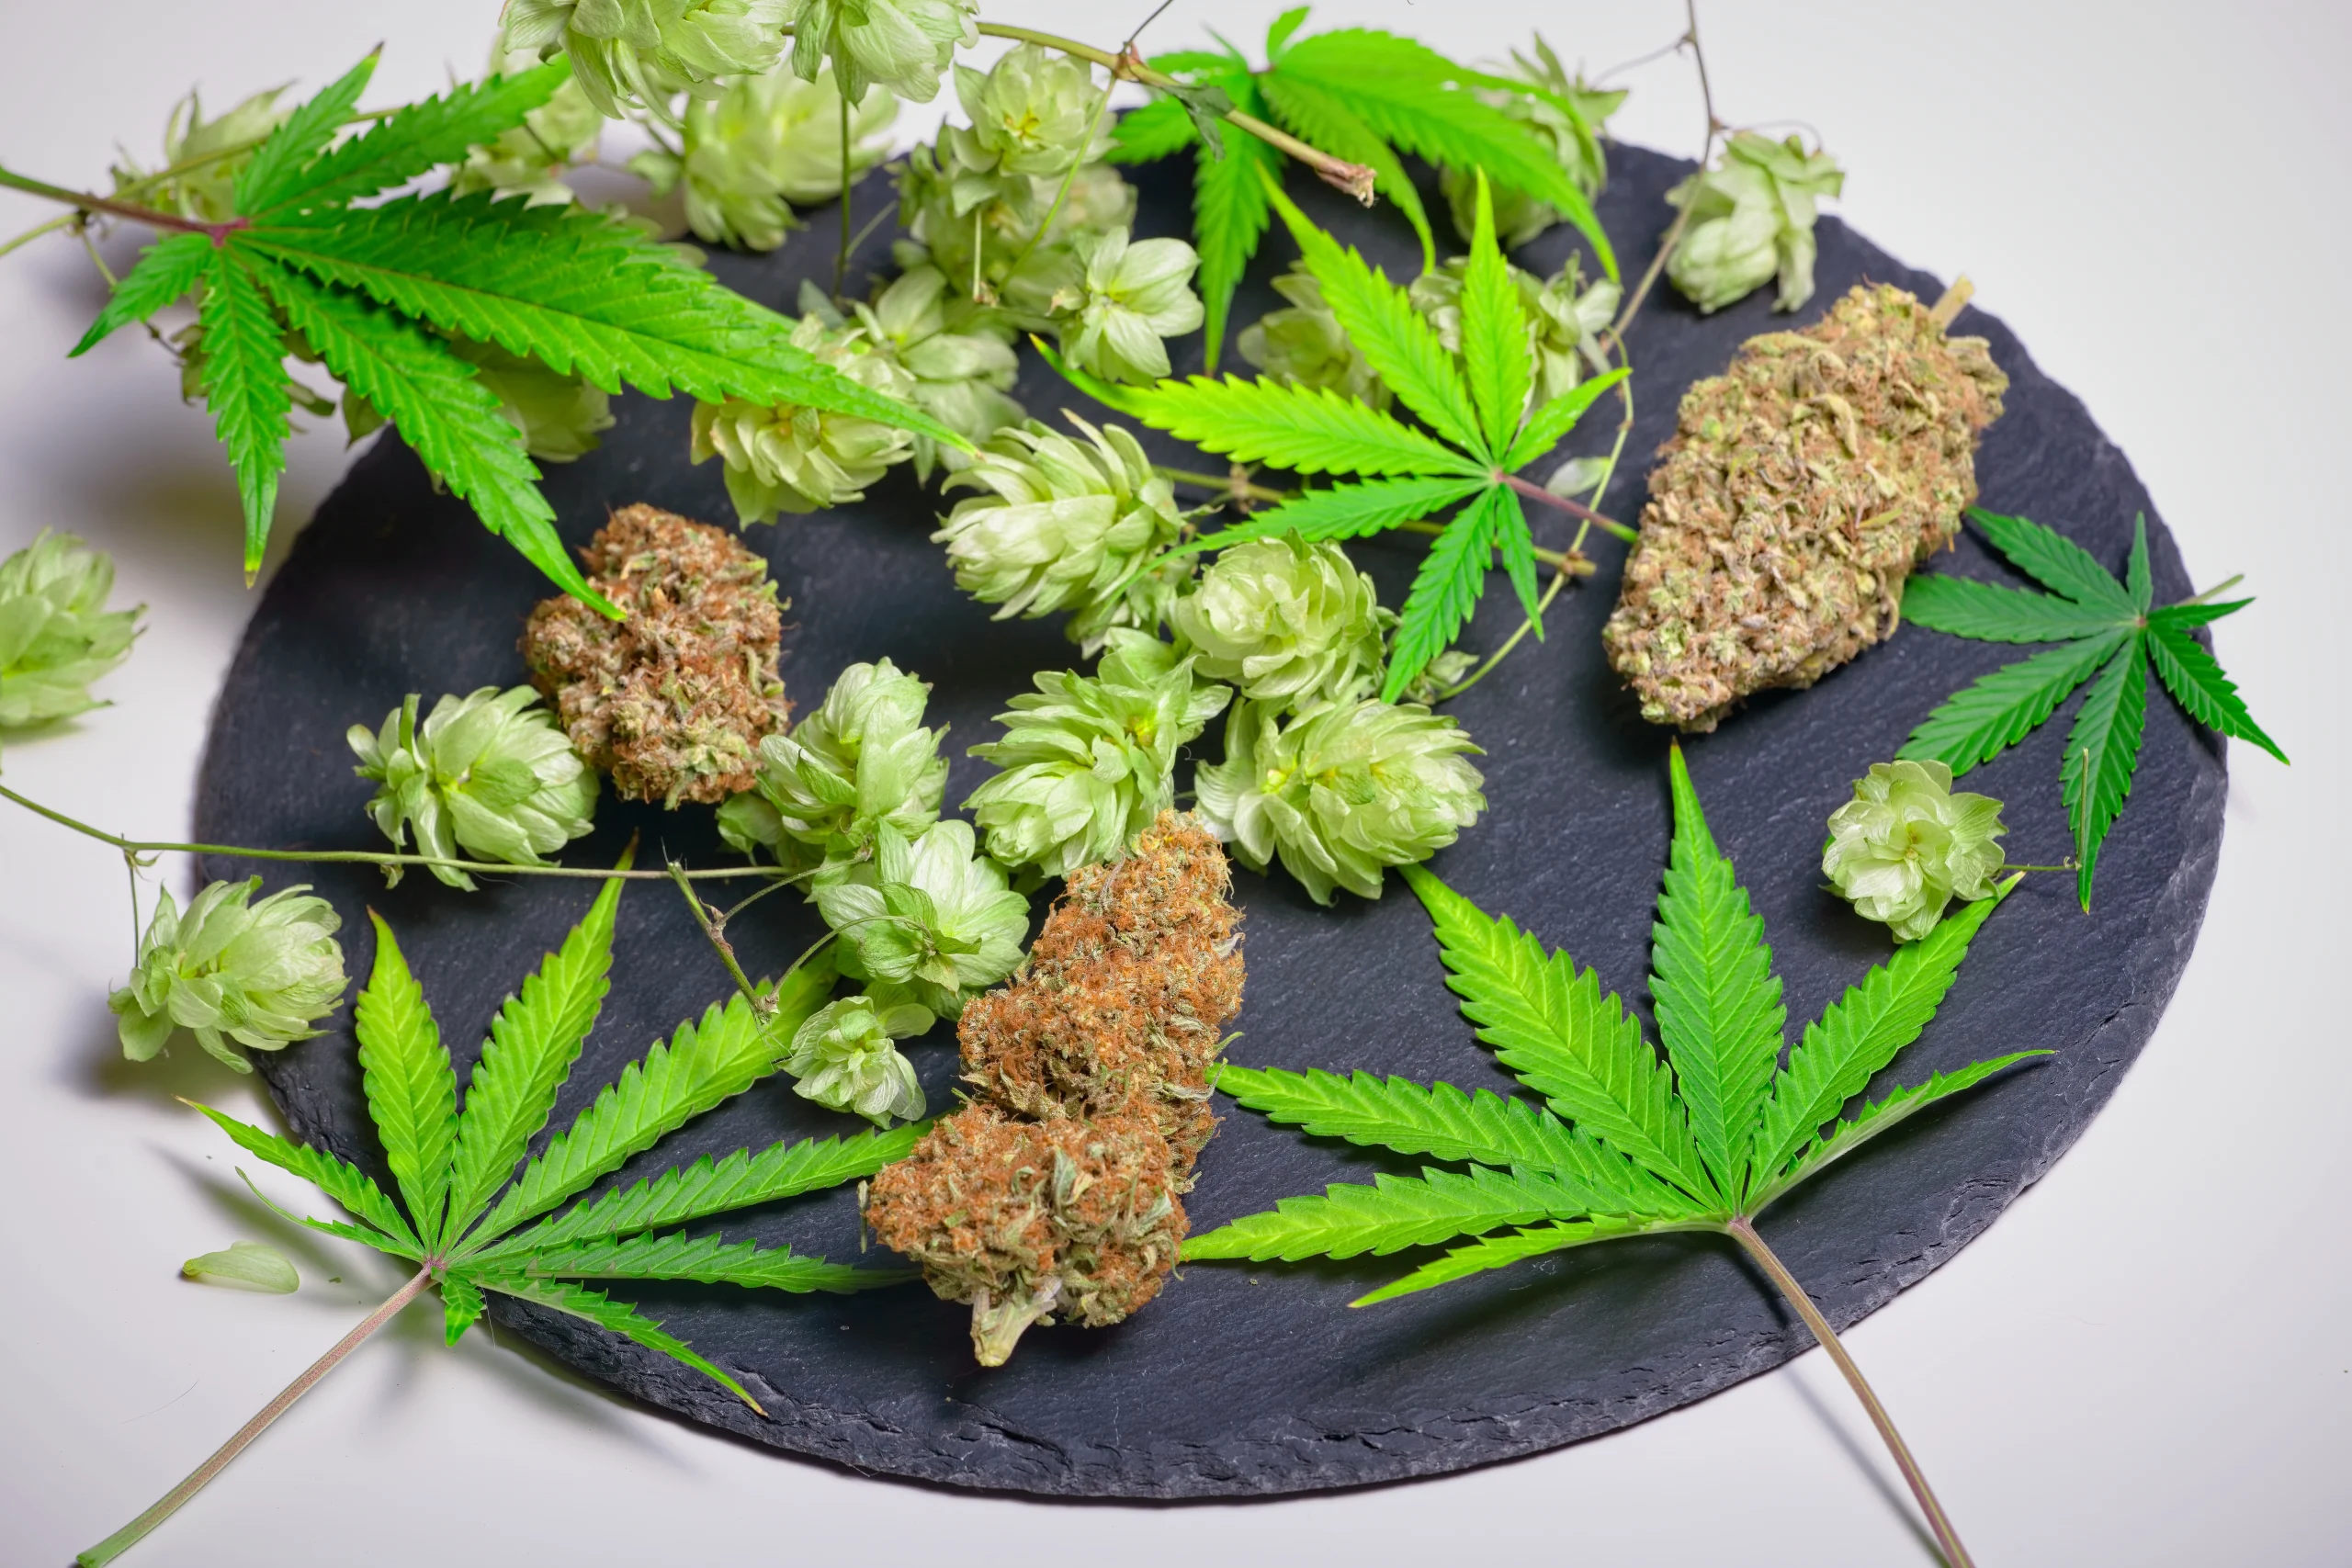 Hops, marijuana buds, and marijuana leaves on a tray; Humulene terpene